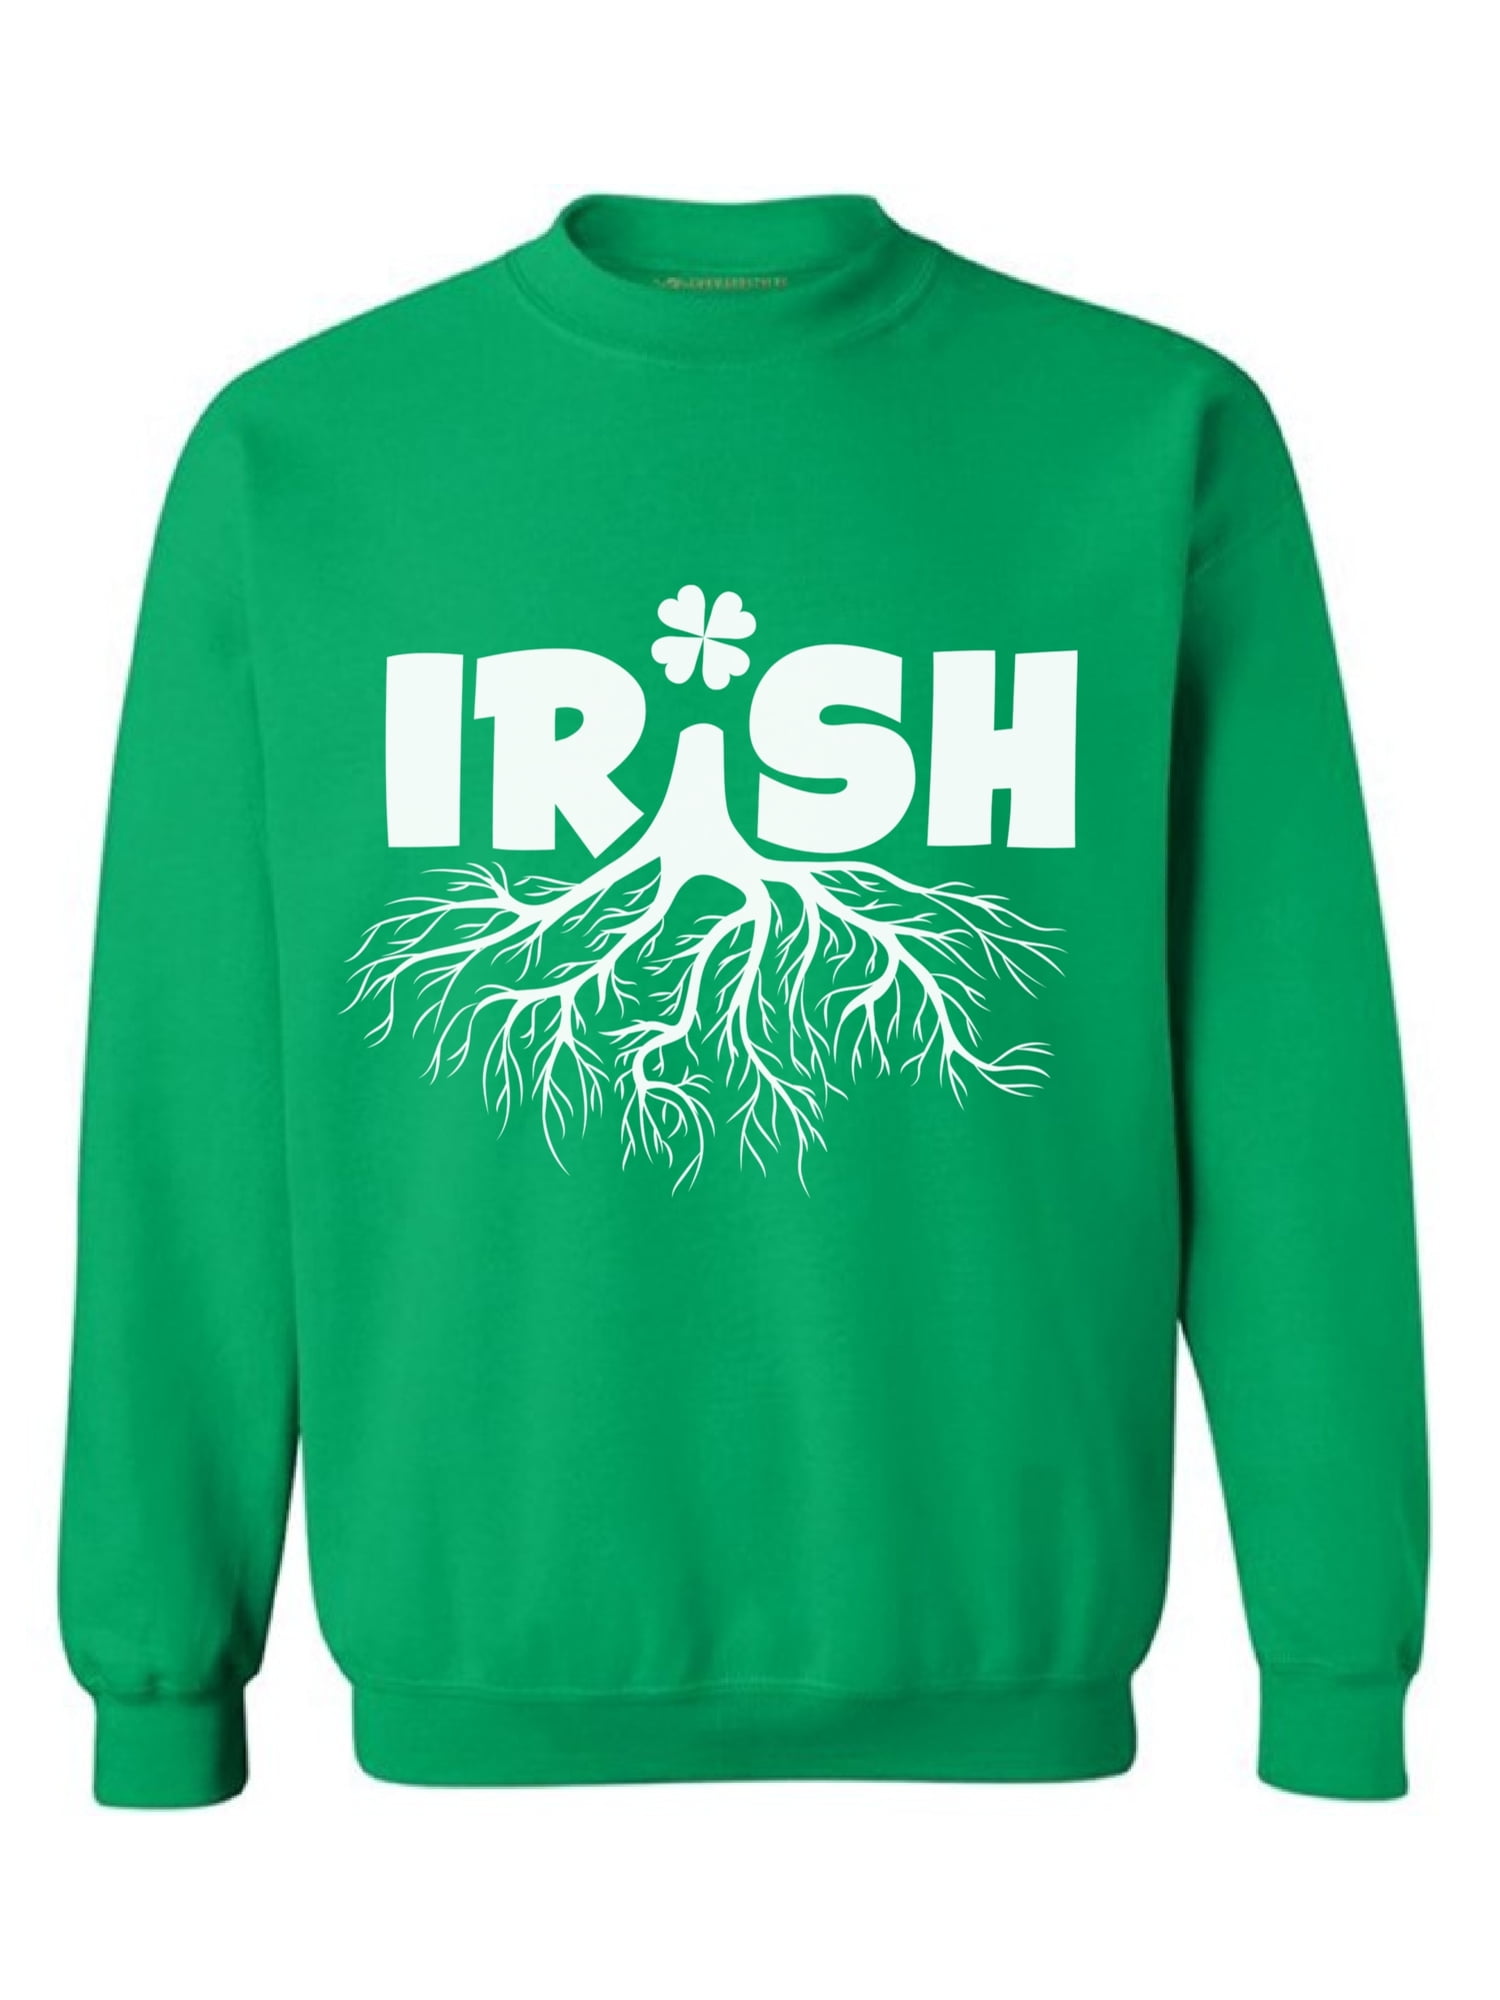 Adult Crewneck Saint ST Patricks Day Irish Pride Unisex Sweater Sweatshirt